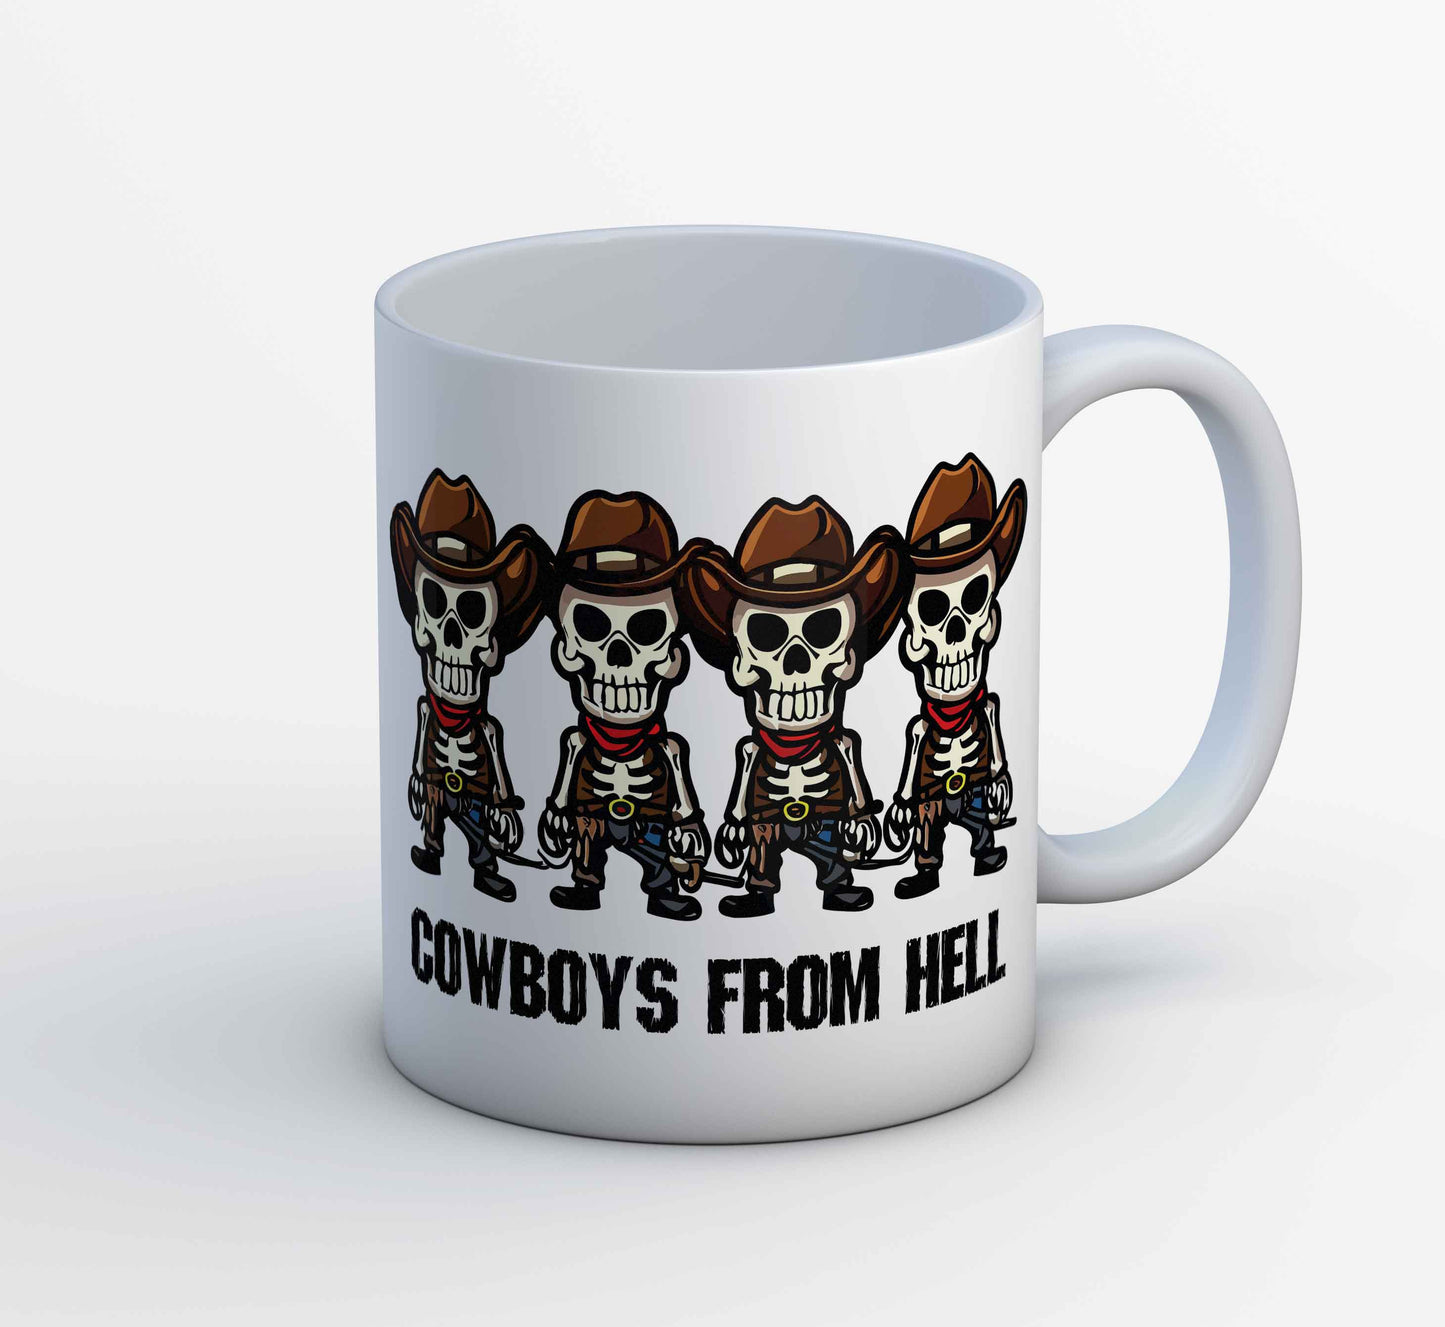 pantera cowboys from hell toon mug coffee ceramic music band buy online usa united states of america the banyan tee tbt men women girls boys unisex